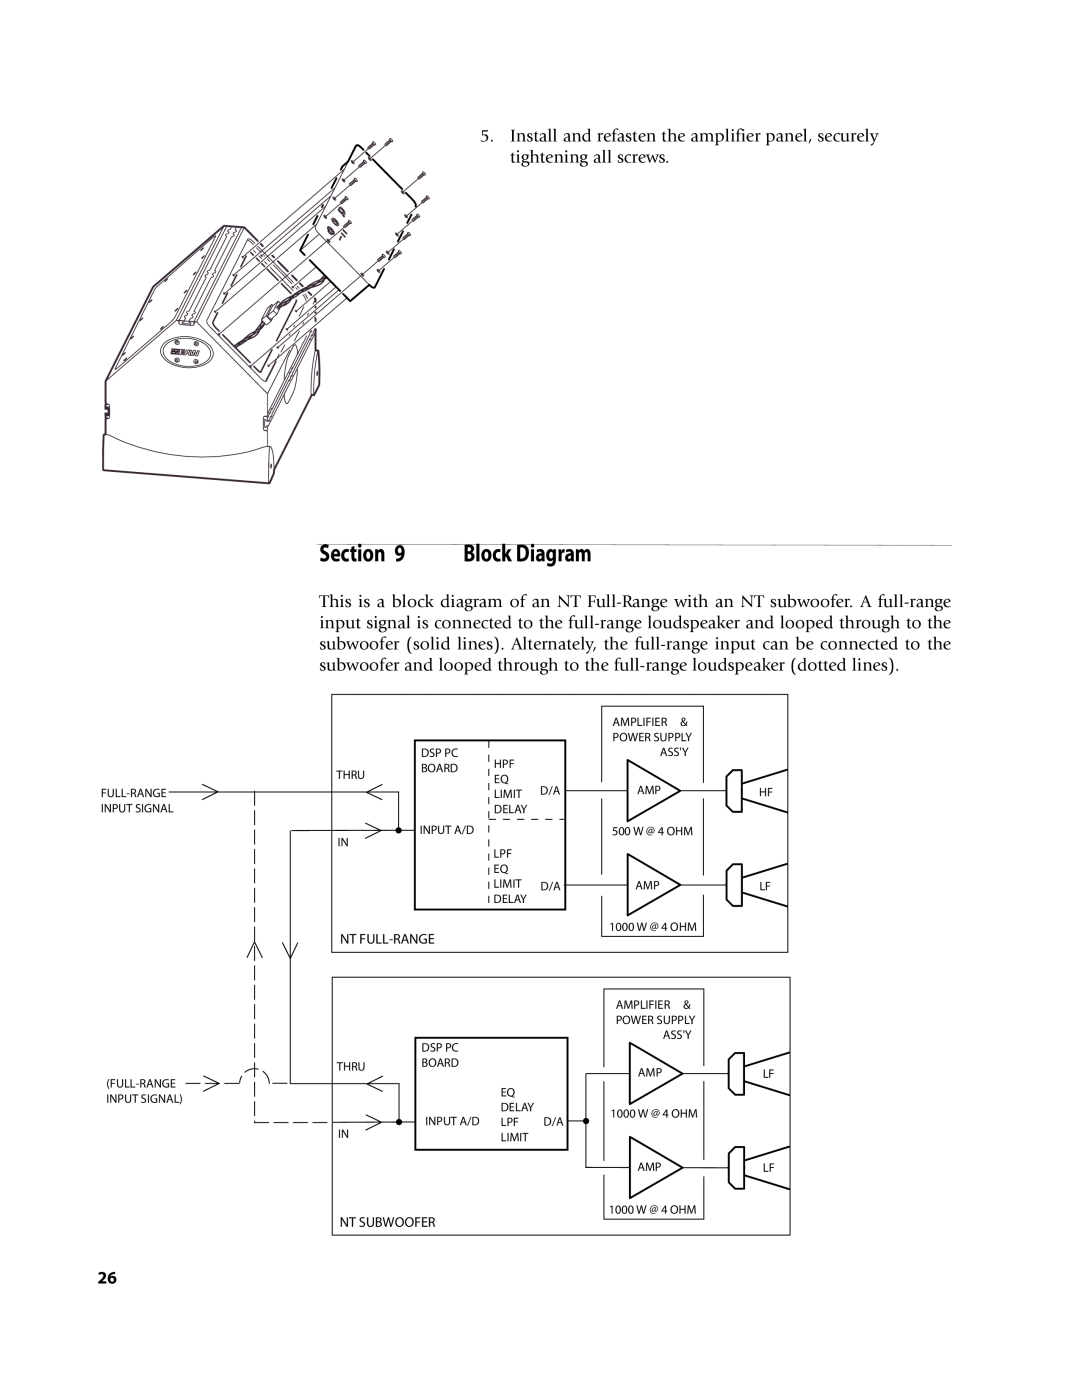 EAW NTS22, NT56, NT26, NT29, NT59 owner manual Block Diagram, Section, Nt Full-Range, Nt Subwoofer 